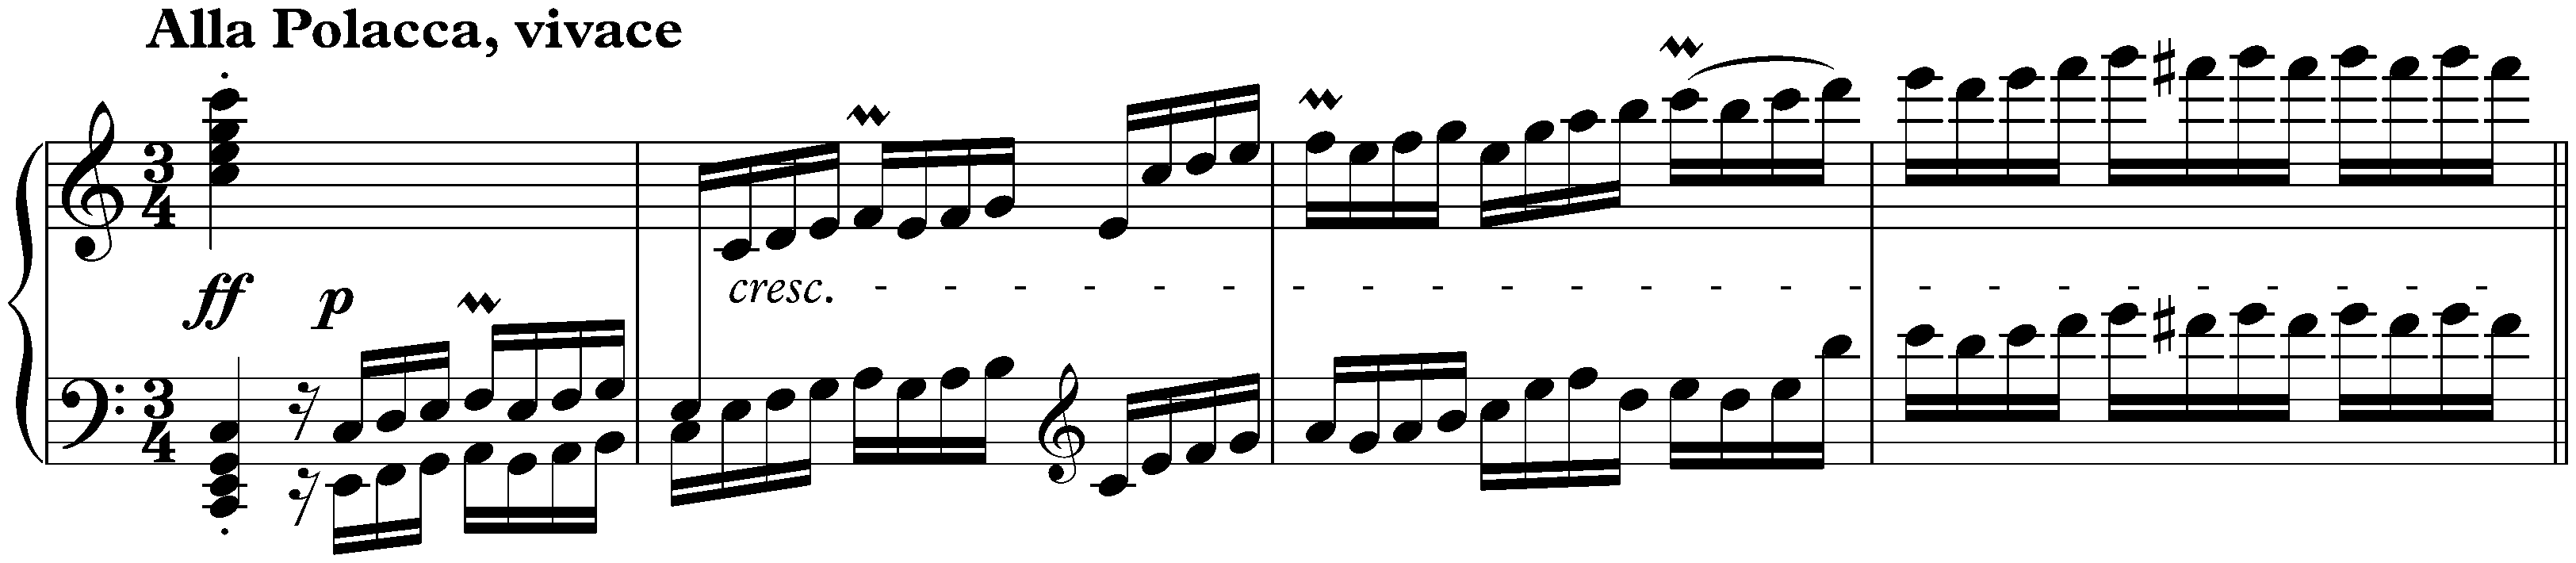 Polonaise in C major, op. 89